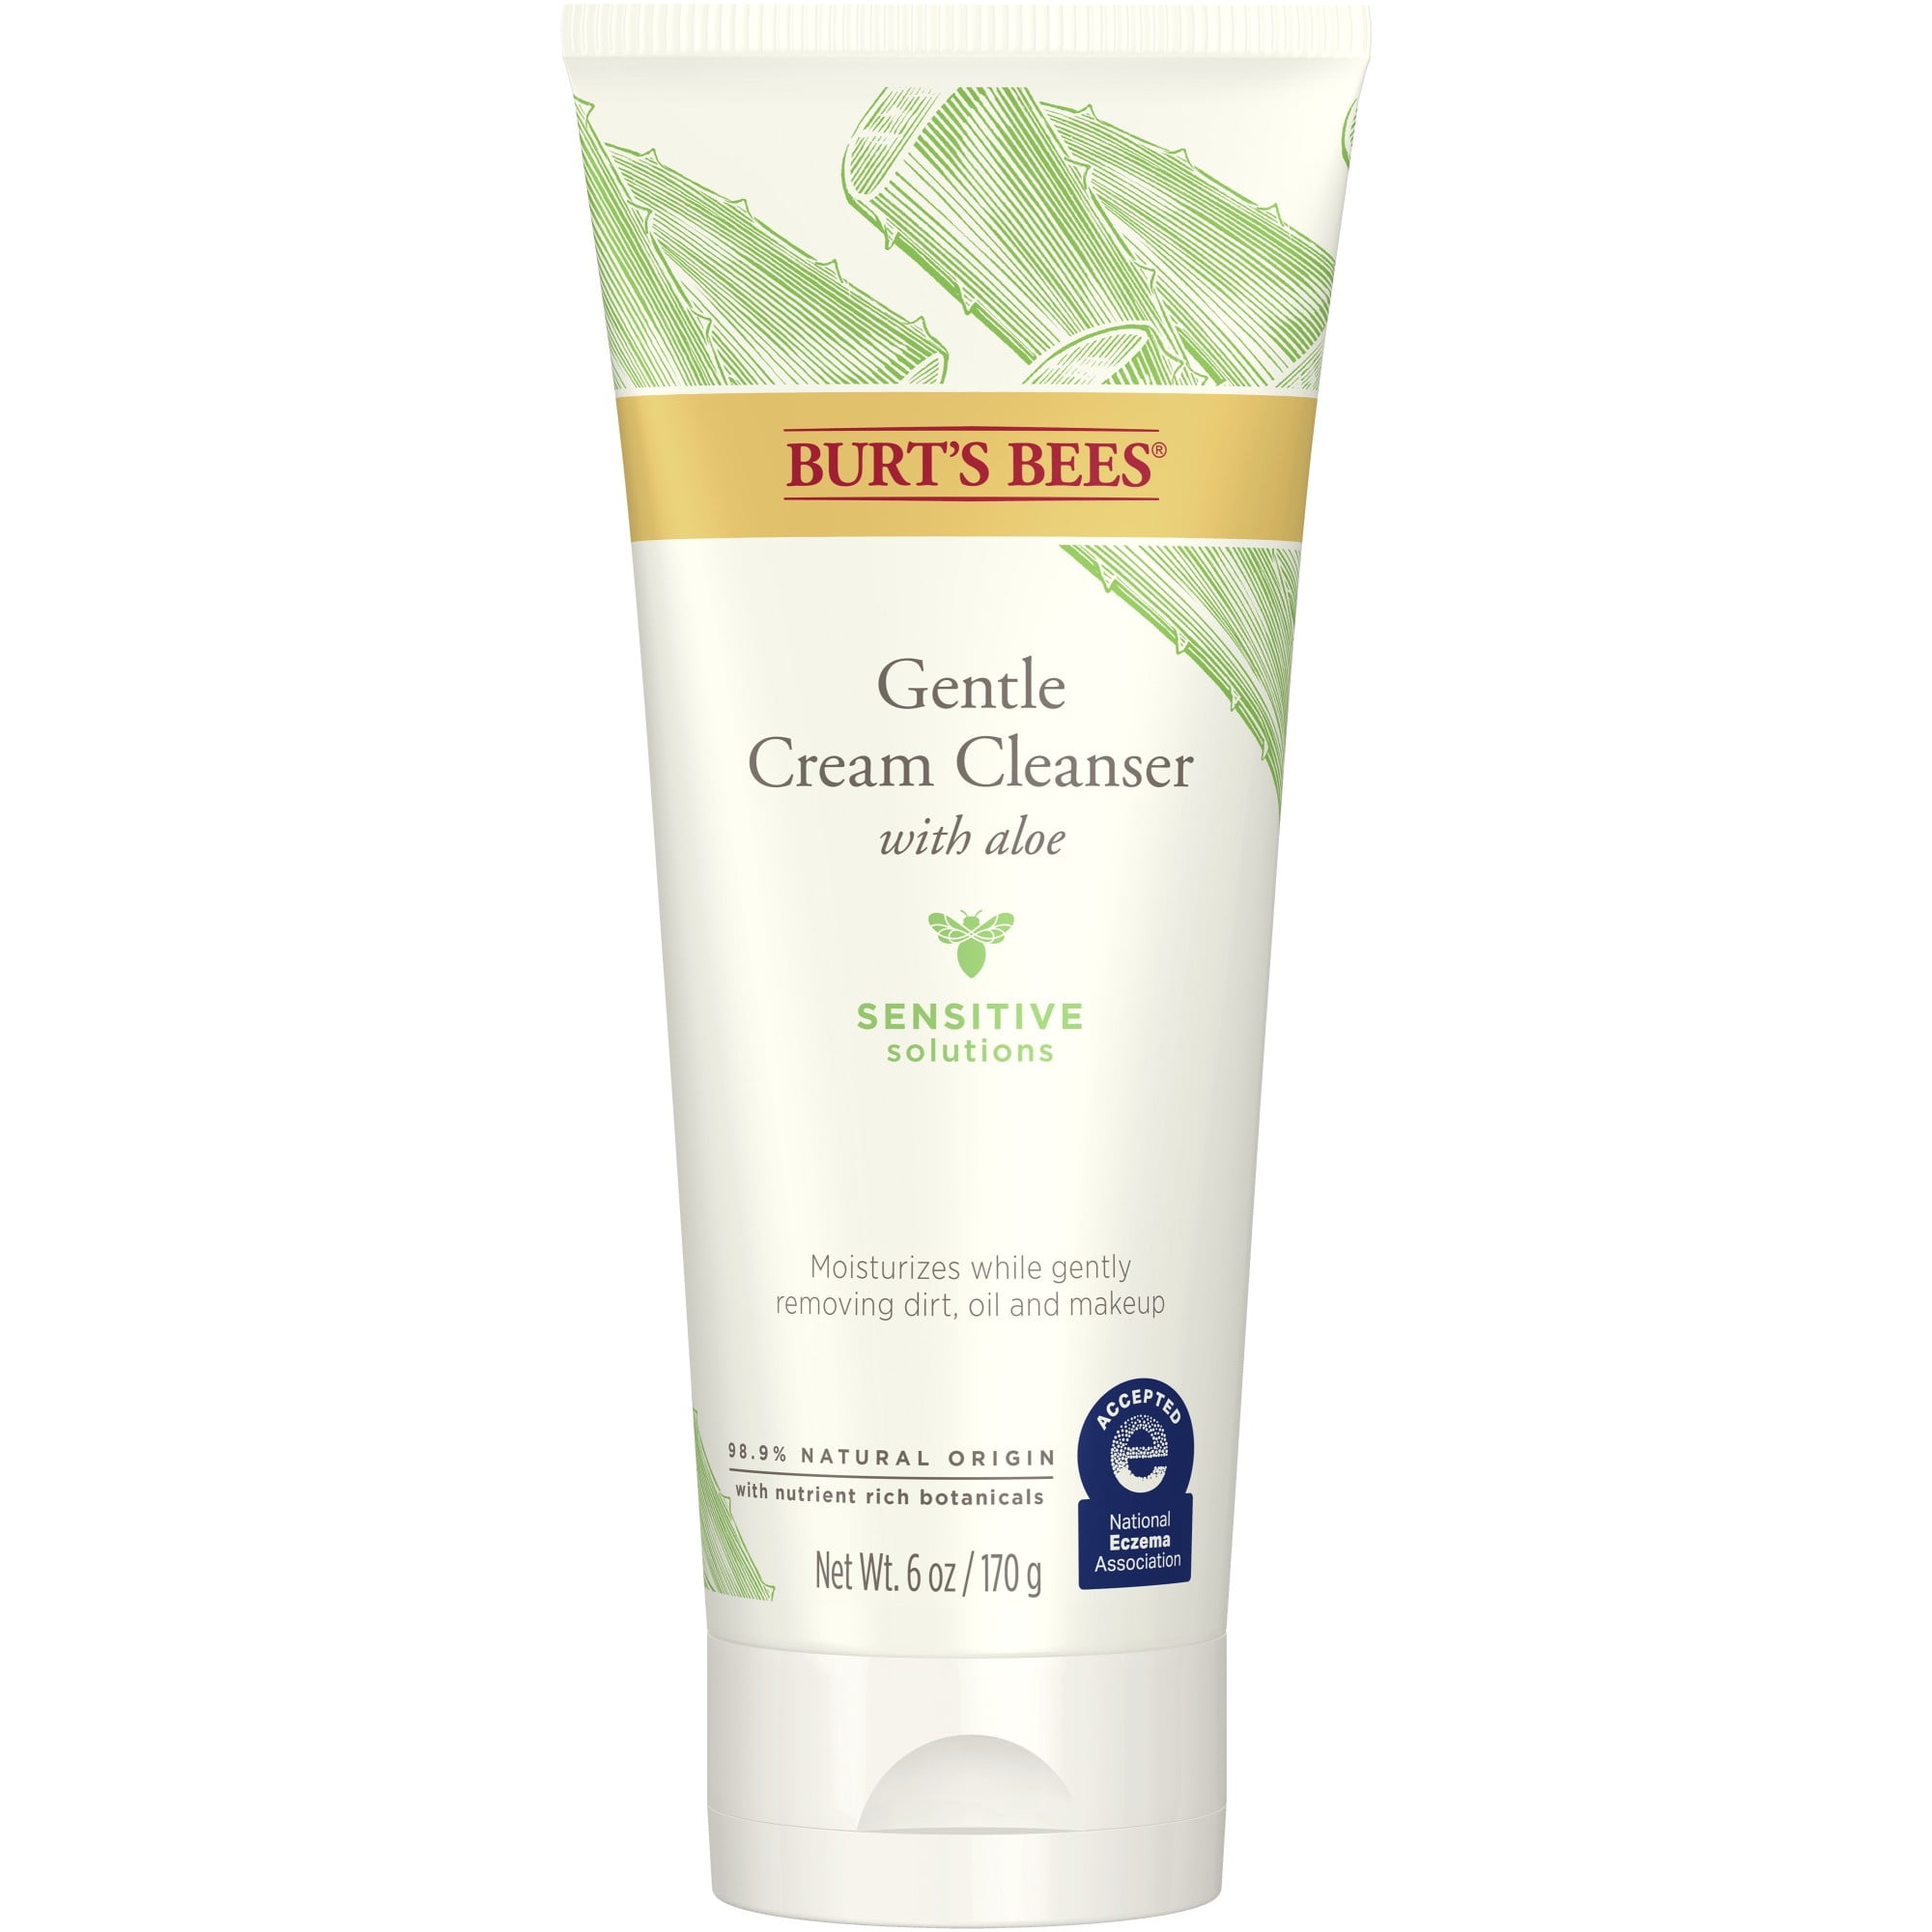 Burt's Bees Sensitive Solutions Gentle Cream Facial Cleanser with Aloe, 98.9% Natural Origin, 6 fl oz